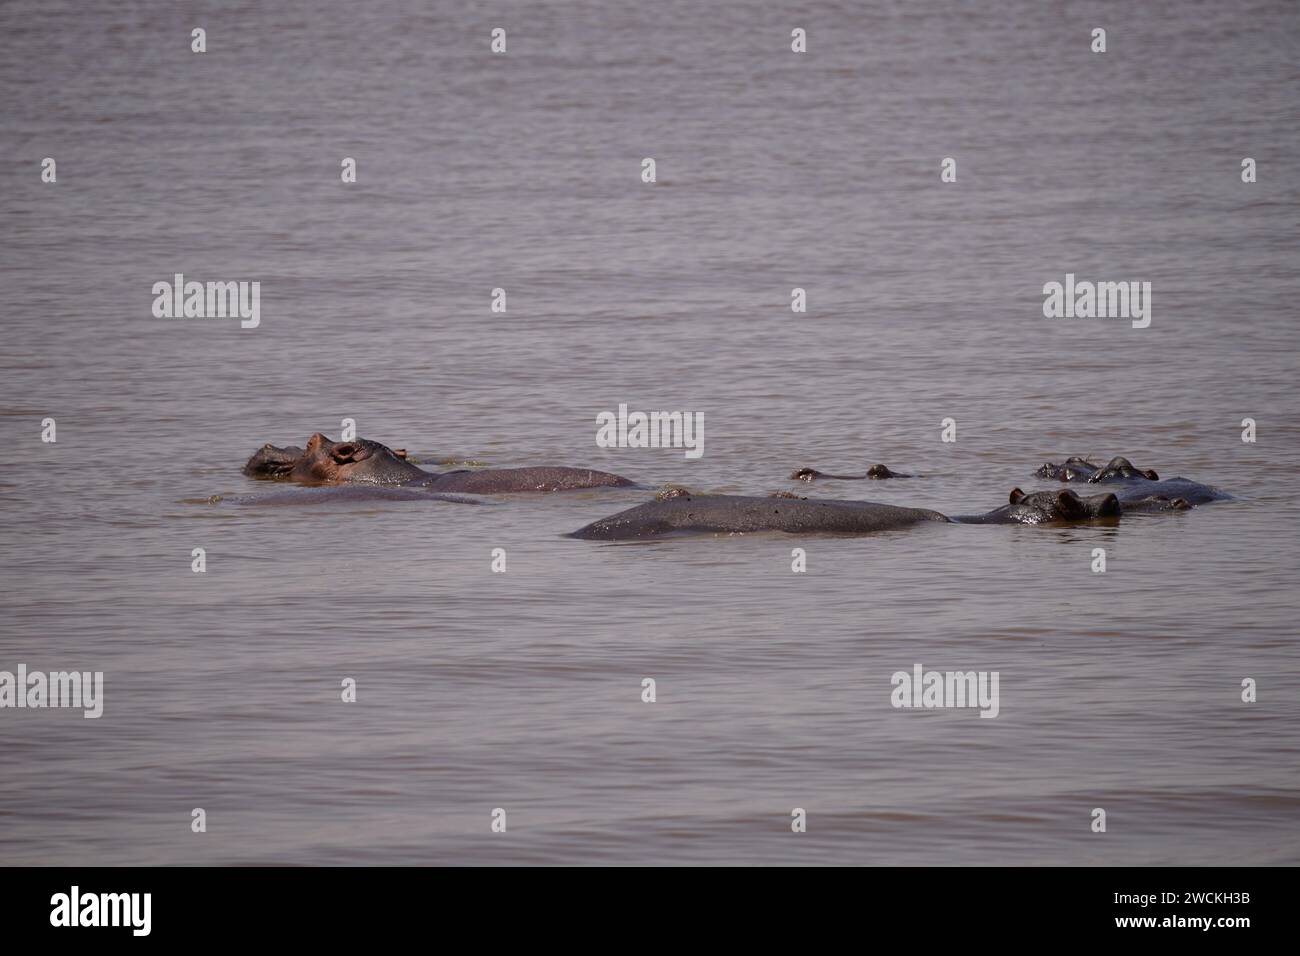 hippos in lake Stock Photo